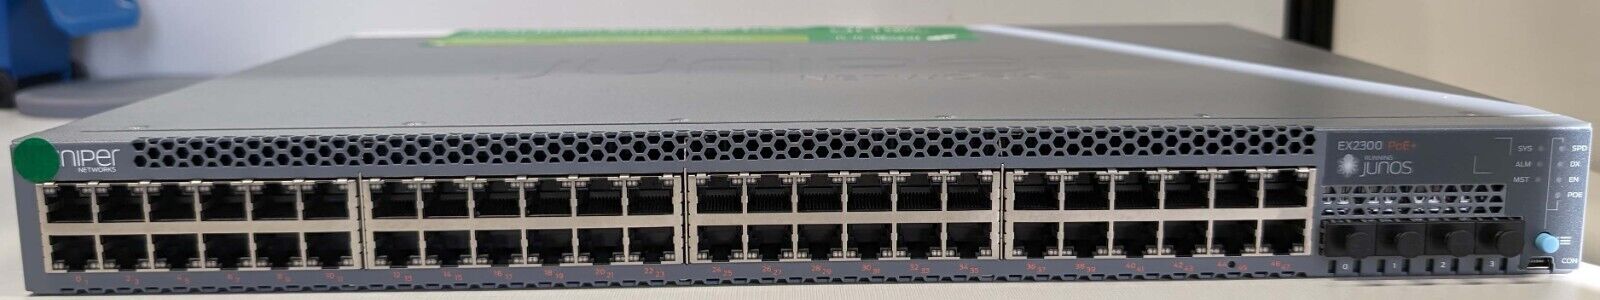 Juniper Networks EX2300 (EX2300-48P) 48-Port Ethernet Switch